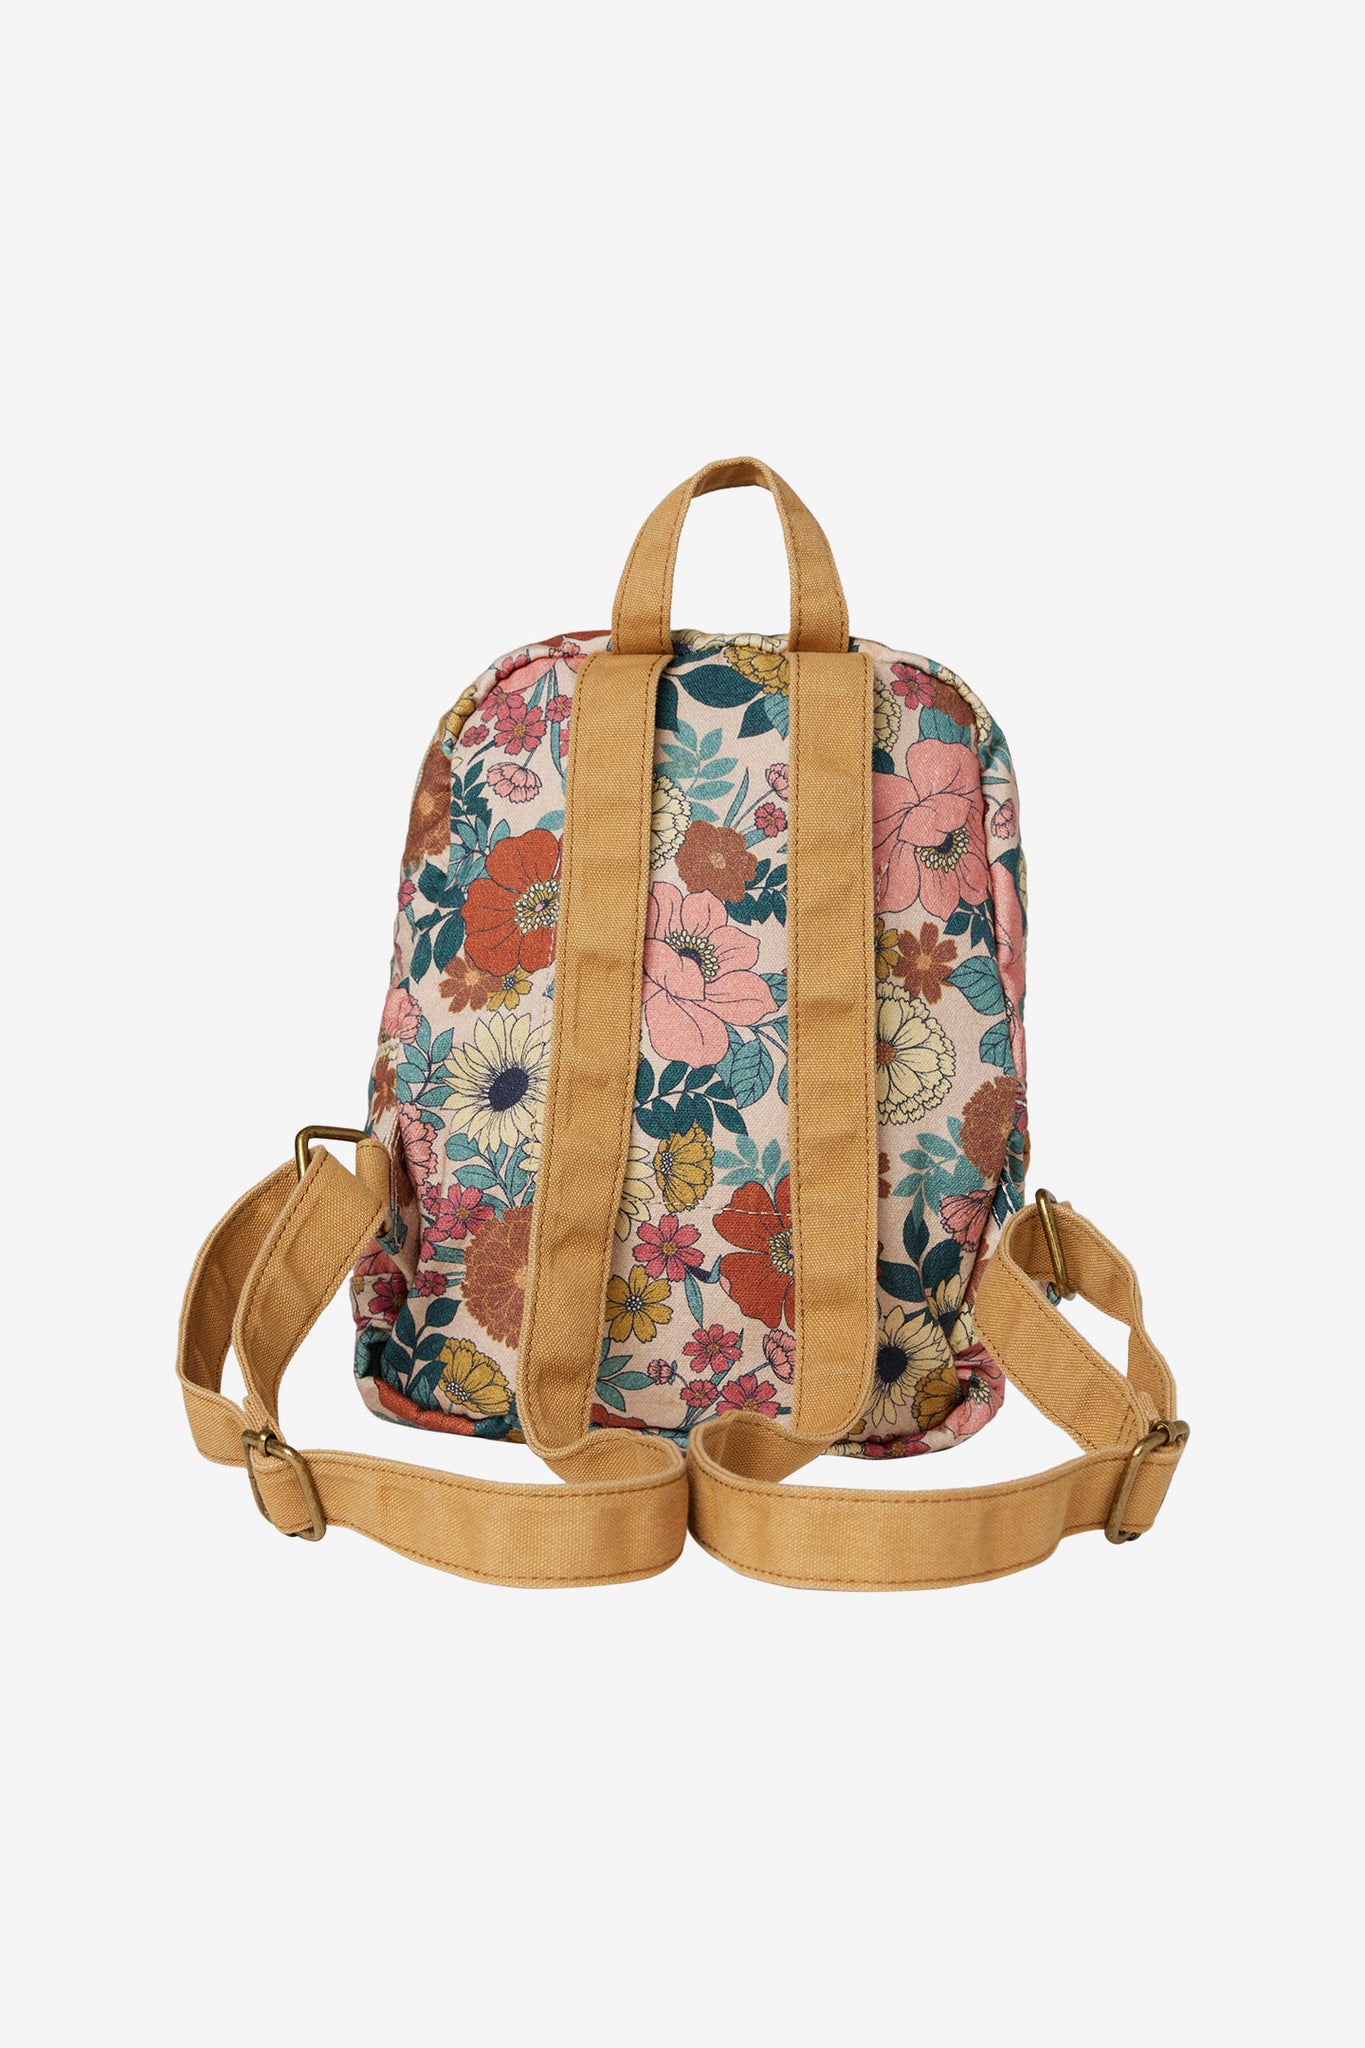 Amazon.com: KKXIU Women Small Backpack Purse Convertible Leather Mini  Daypacks Crossbody Shoulder Bag (Black) : Clothing, Shoes & Jewelry